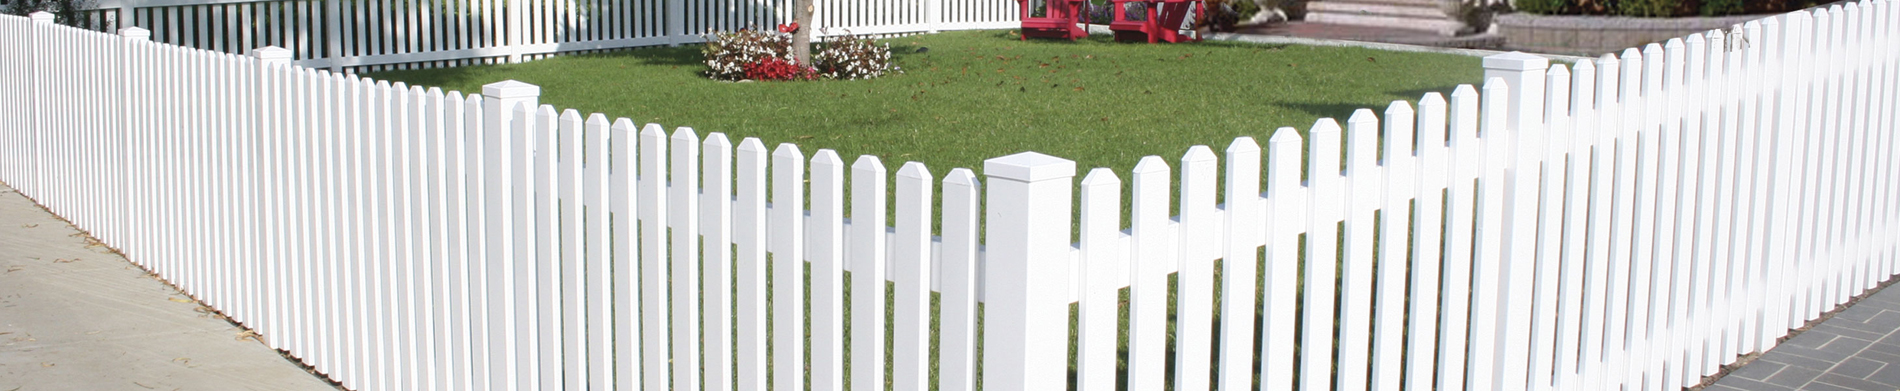 Installing a white vinyl fence around Brian’s home – custom vinyl fencing from Duramax white vinyl fence